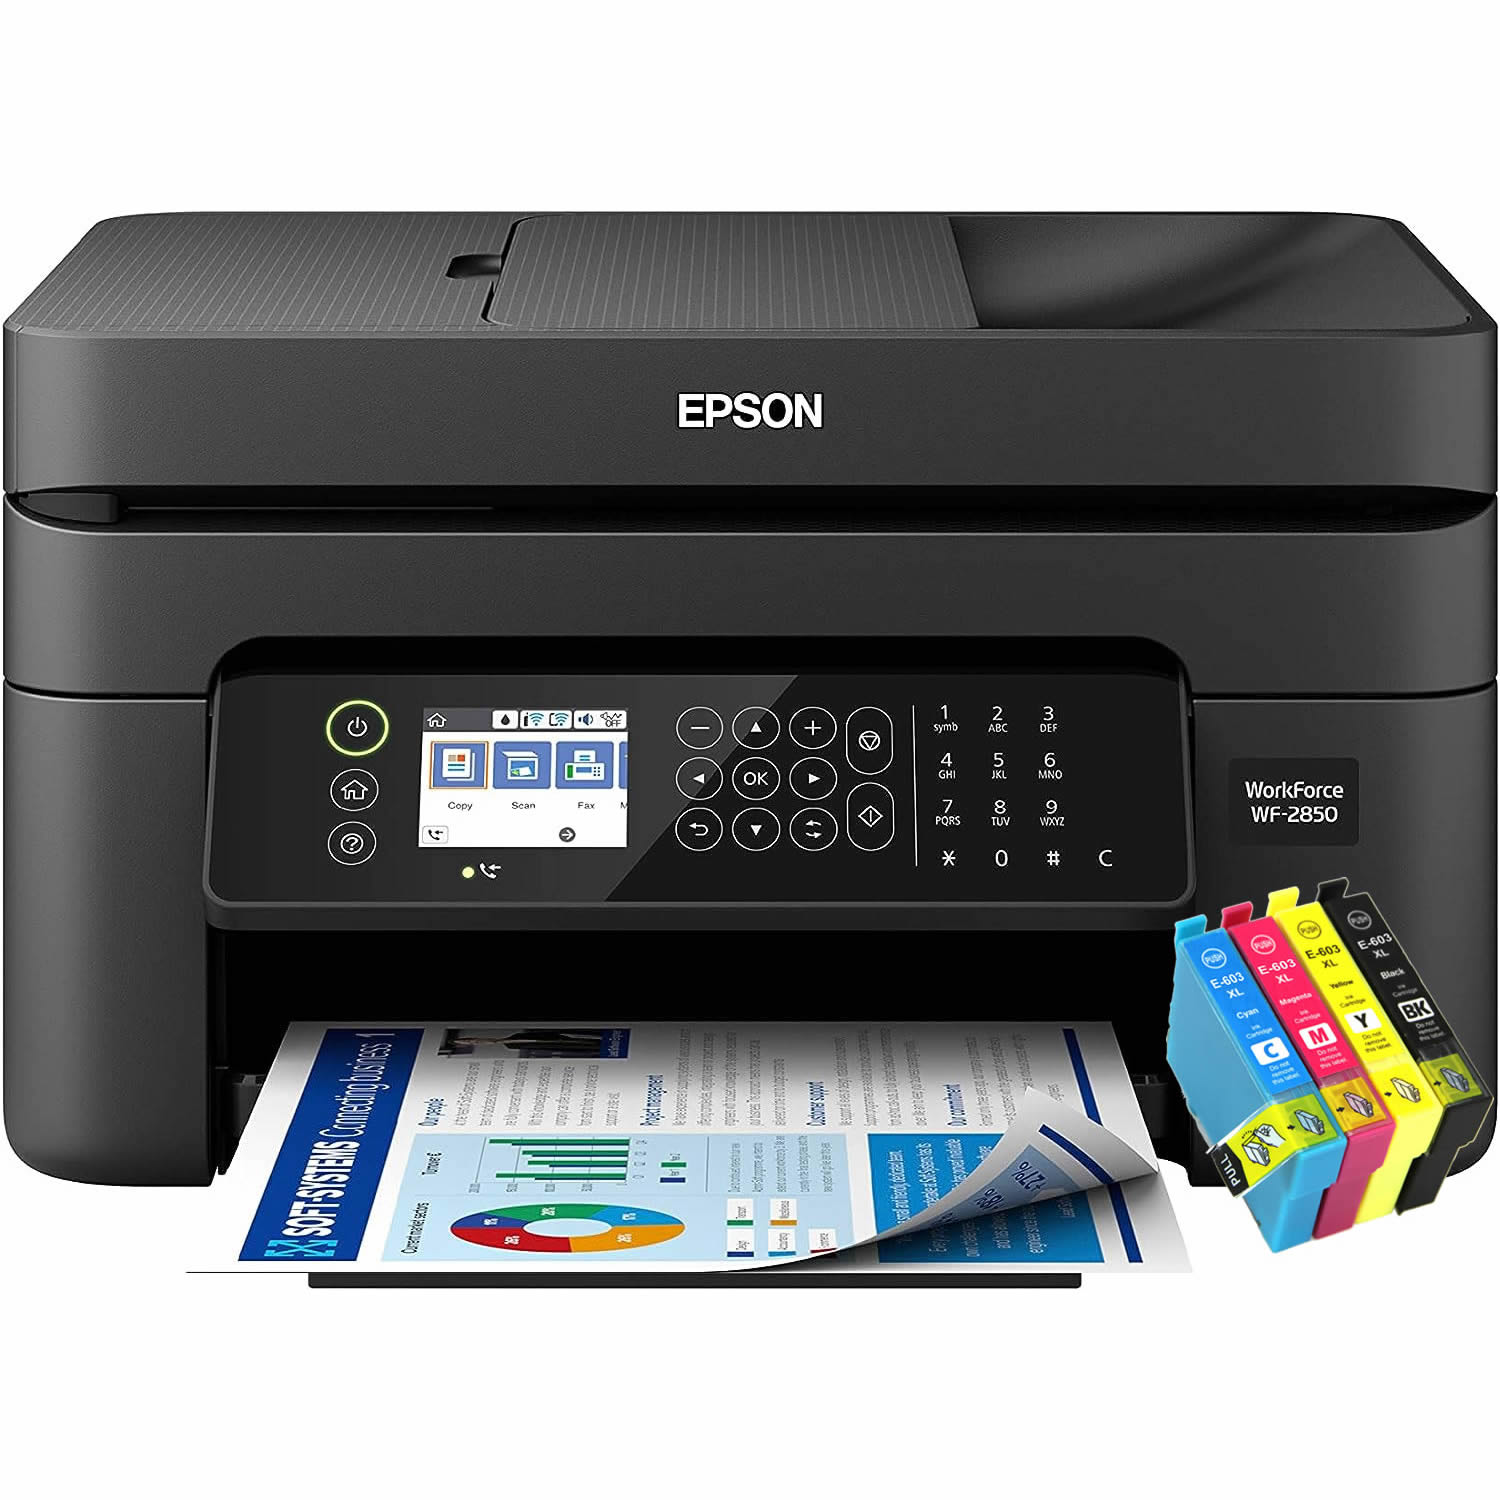 Epson WF 2850 Ink